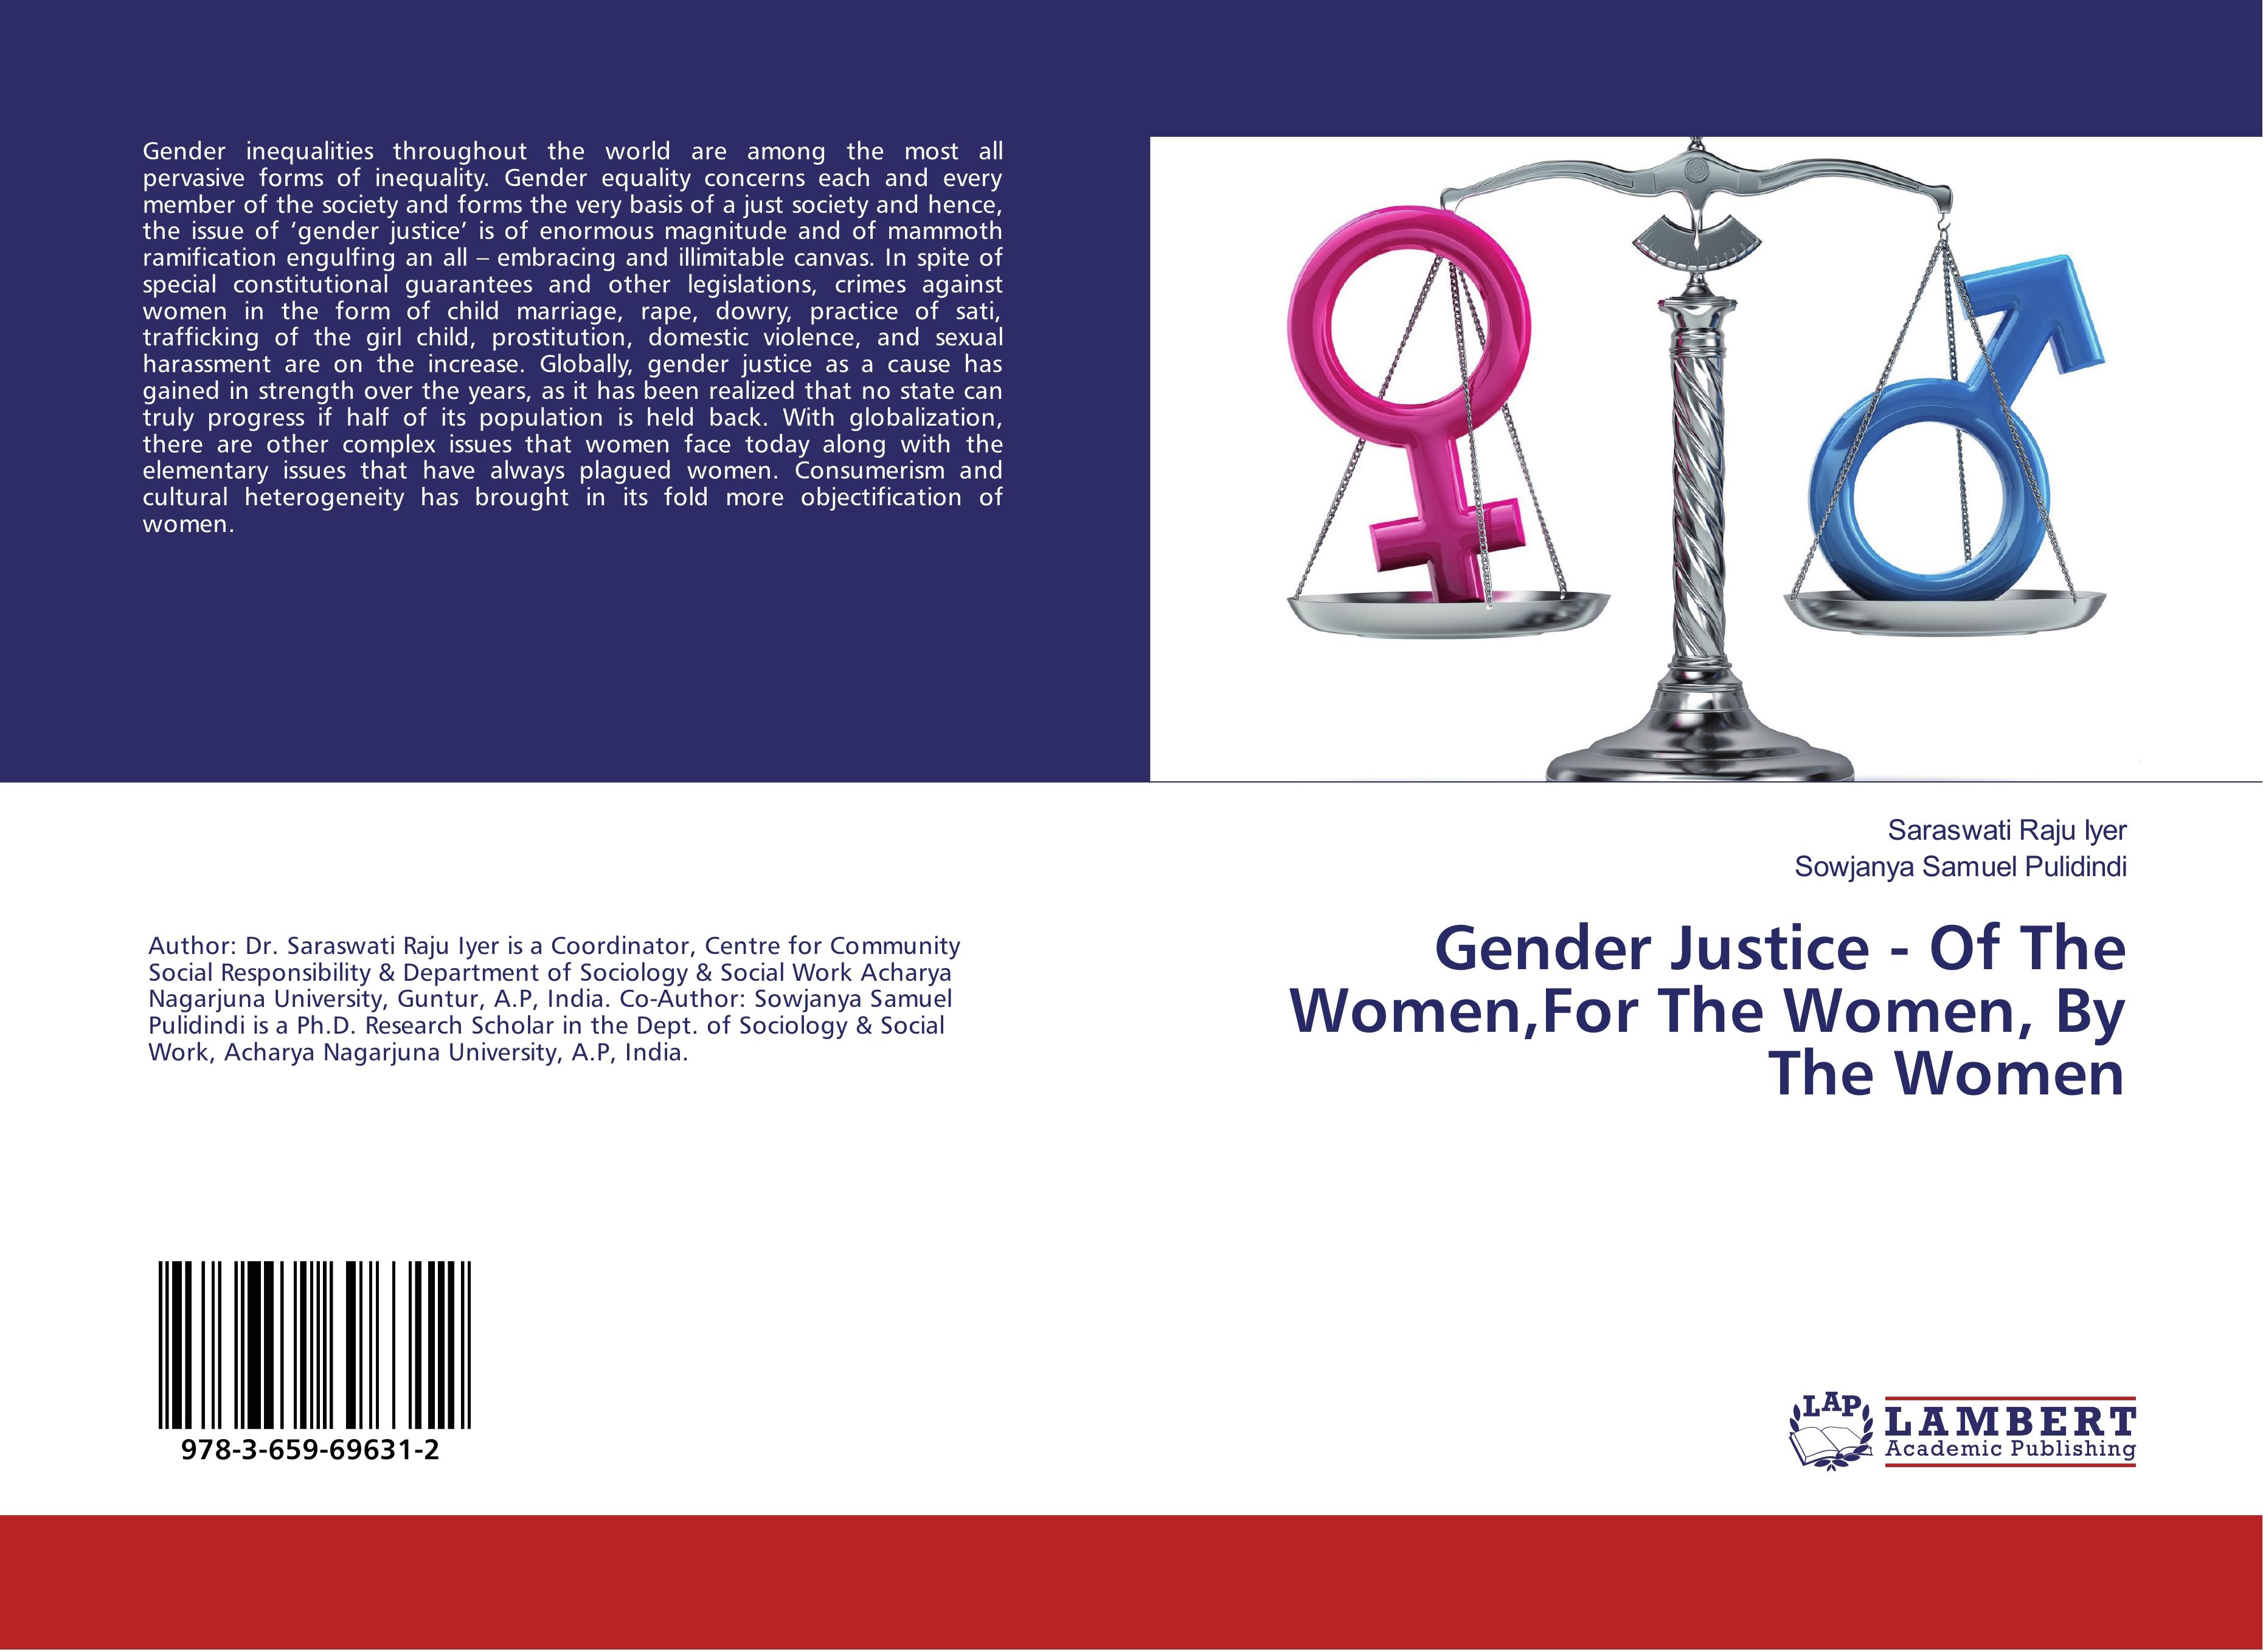 Gender Justice - Of The Women,For The Women, By The Women - Saraswati Raju Iyer|Sowjanya Samuel Pulidindi